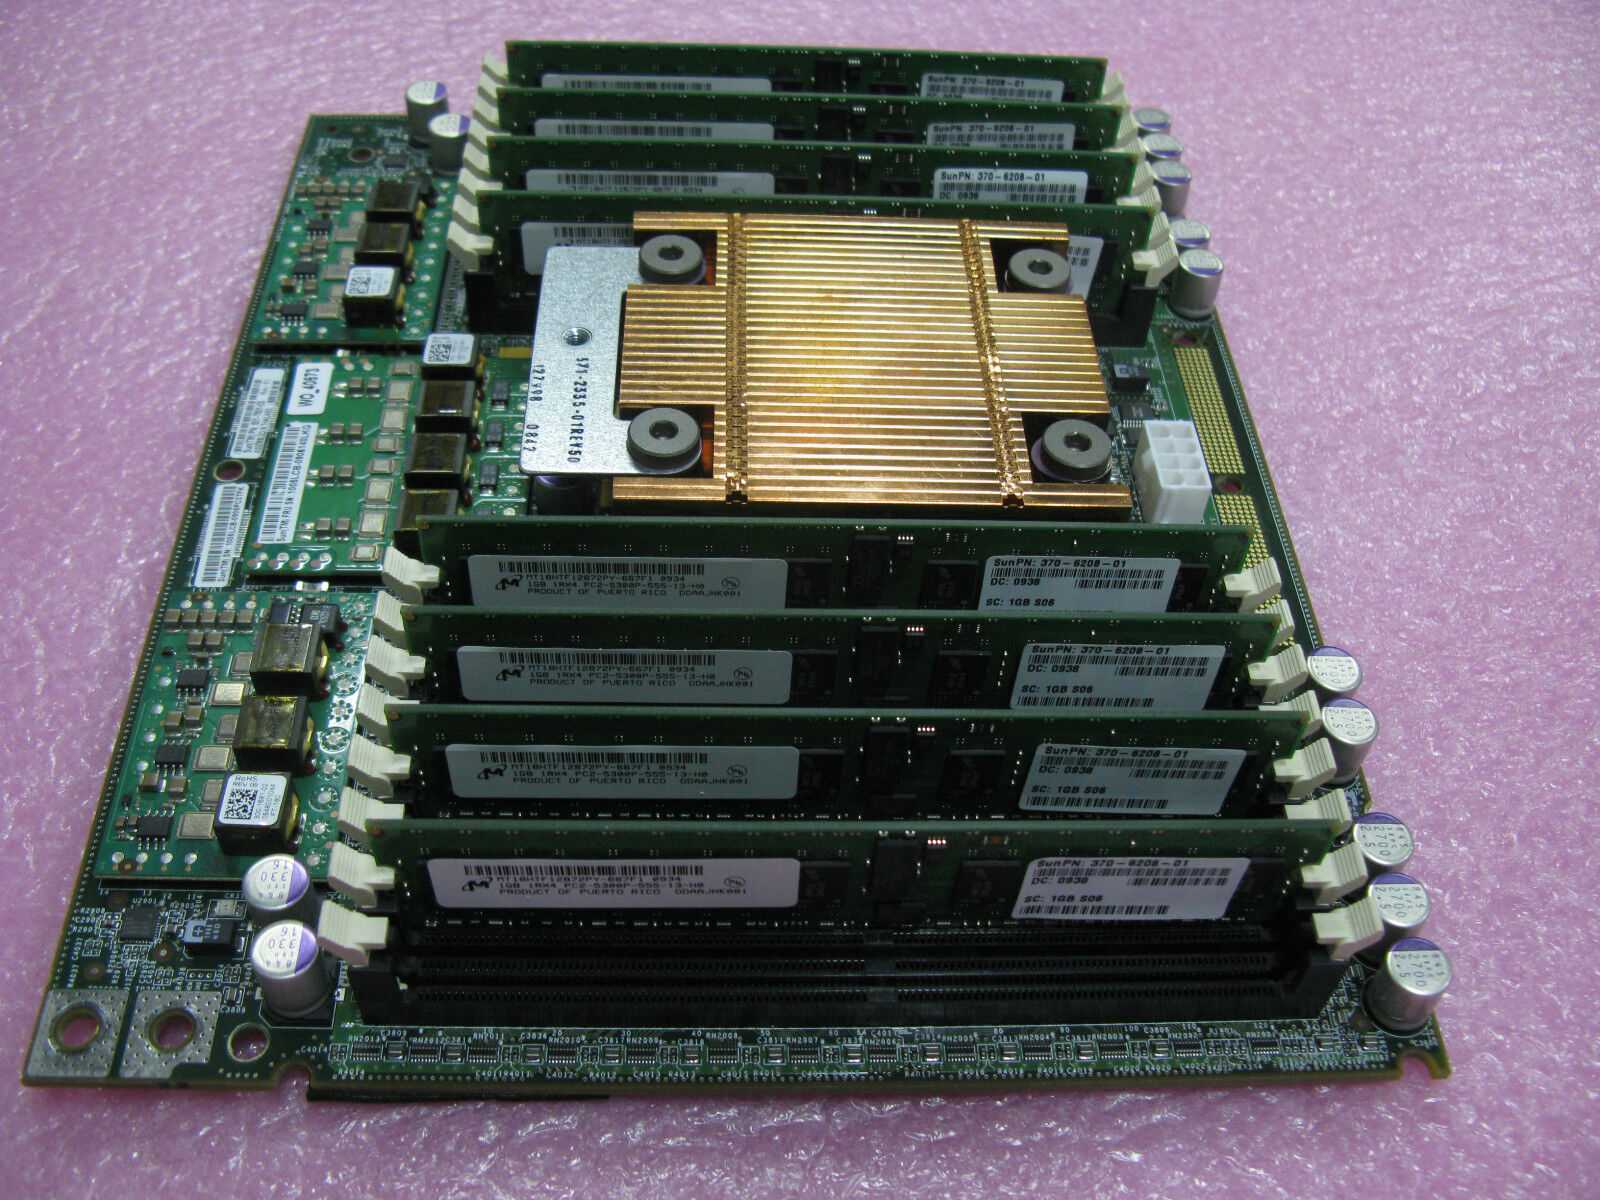 Sun Netra T2000 CPU/Memory Board 501-7501 with 1Ghz 8 core CPU, 8GB memory 